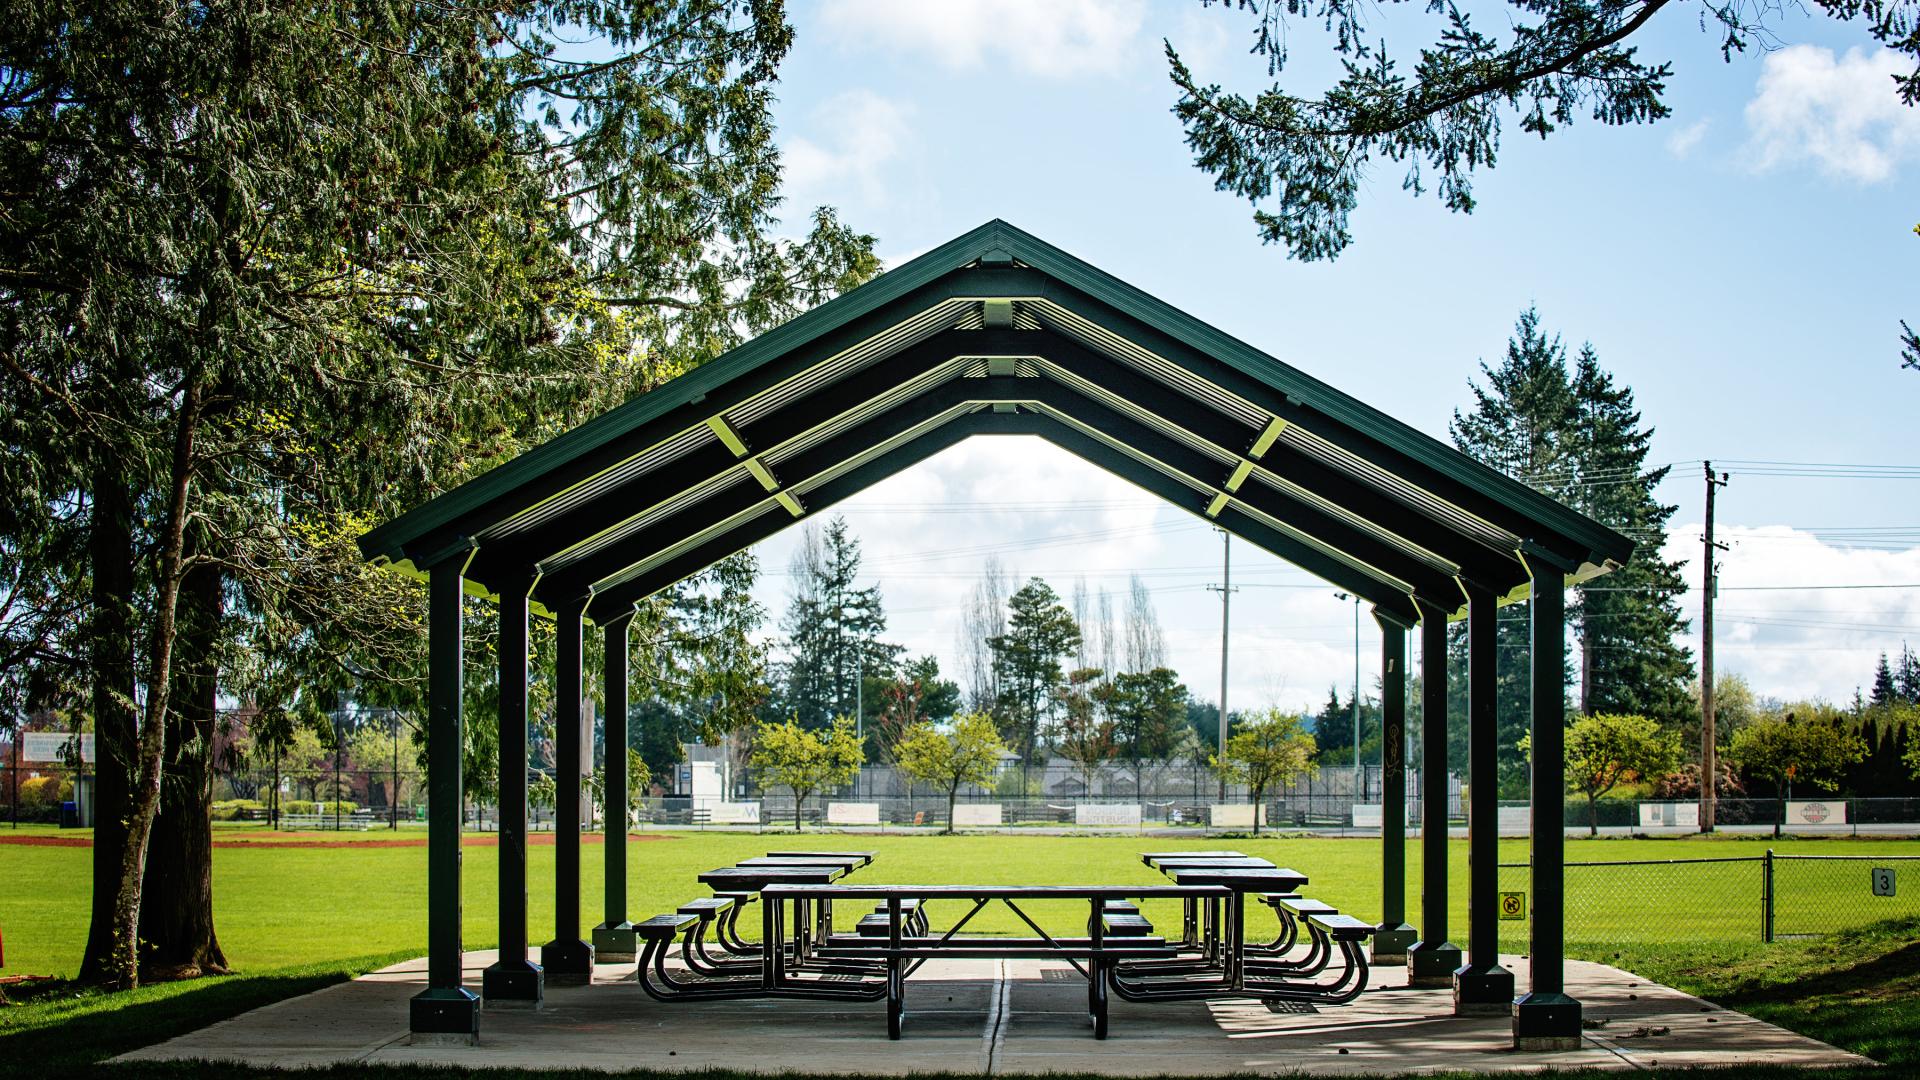 Centennial Park park booking facility shelter